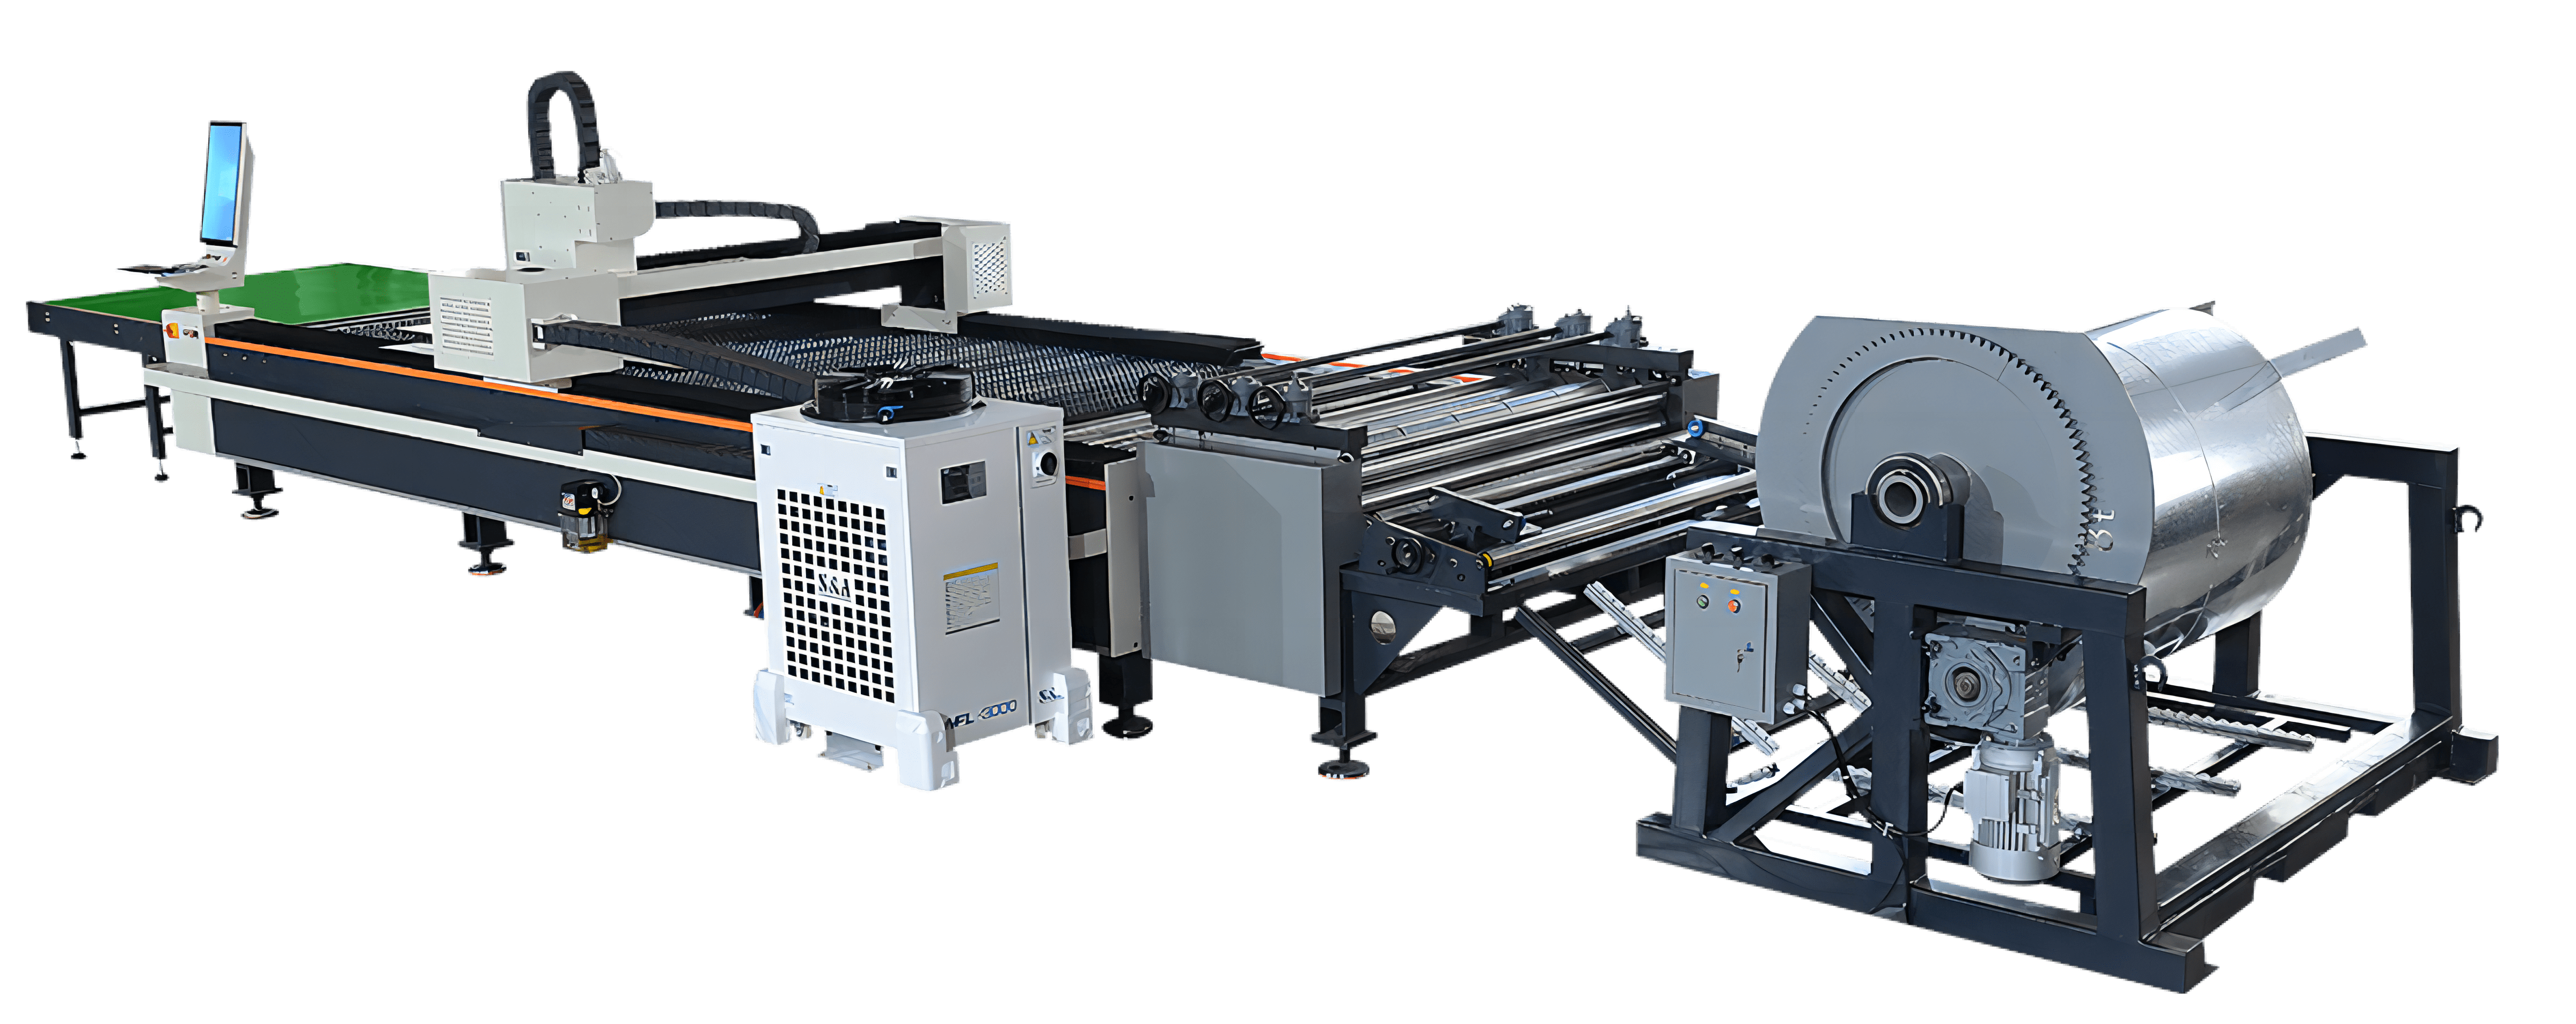 Gear Hobbing Platform Laser Cutting Production Line